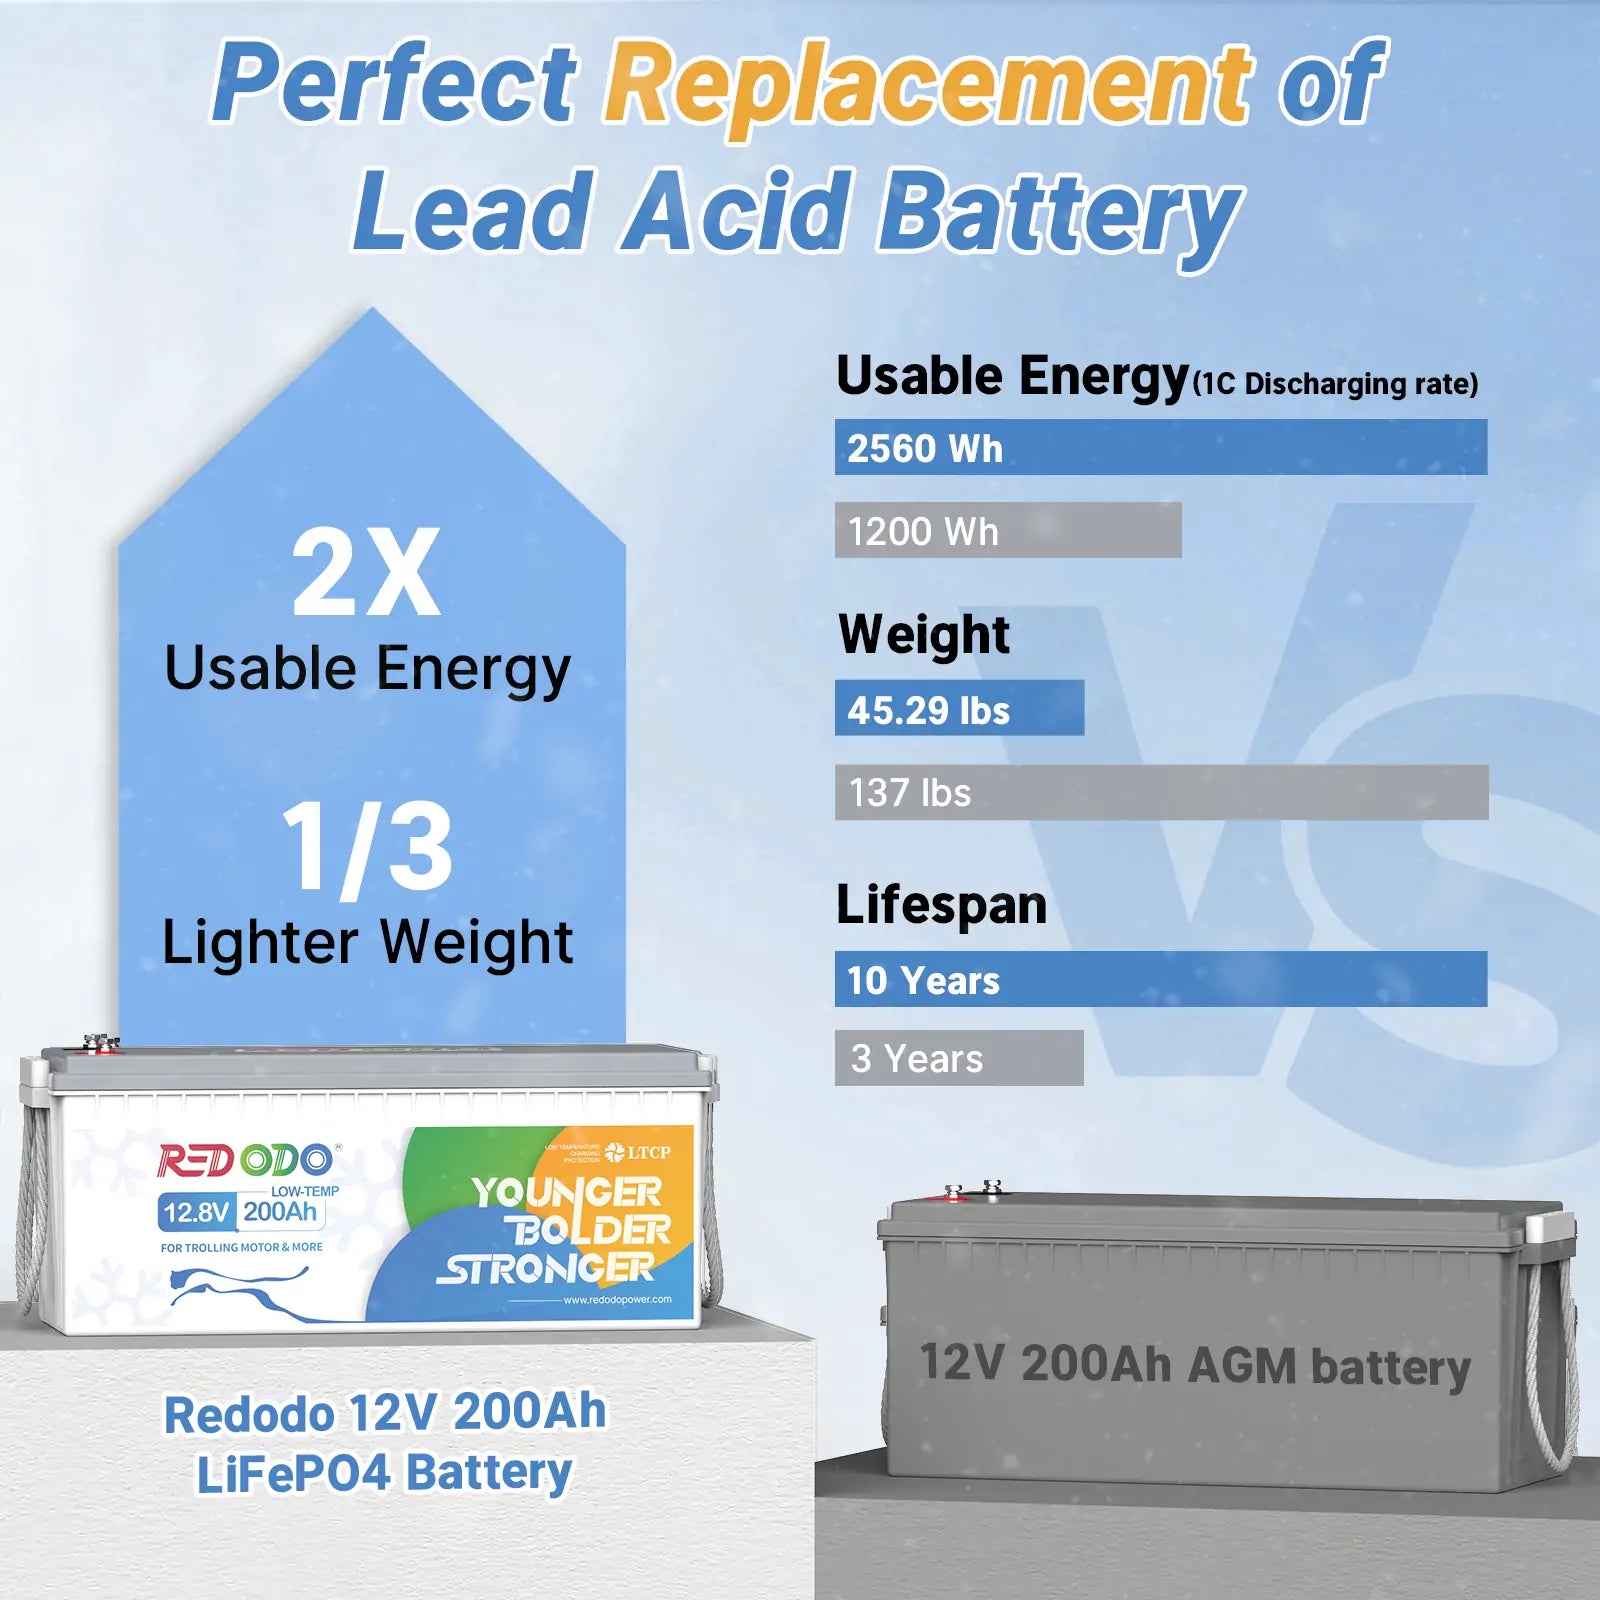 【Only $537】Redodo 12.8V 200AH Low Temp Cutoff LiFePO4 Battery, Perfect for Trolling Motor. Redodo Power